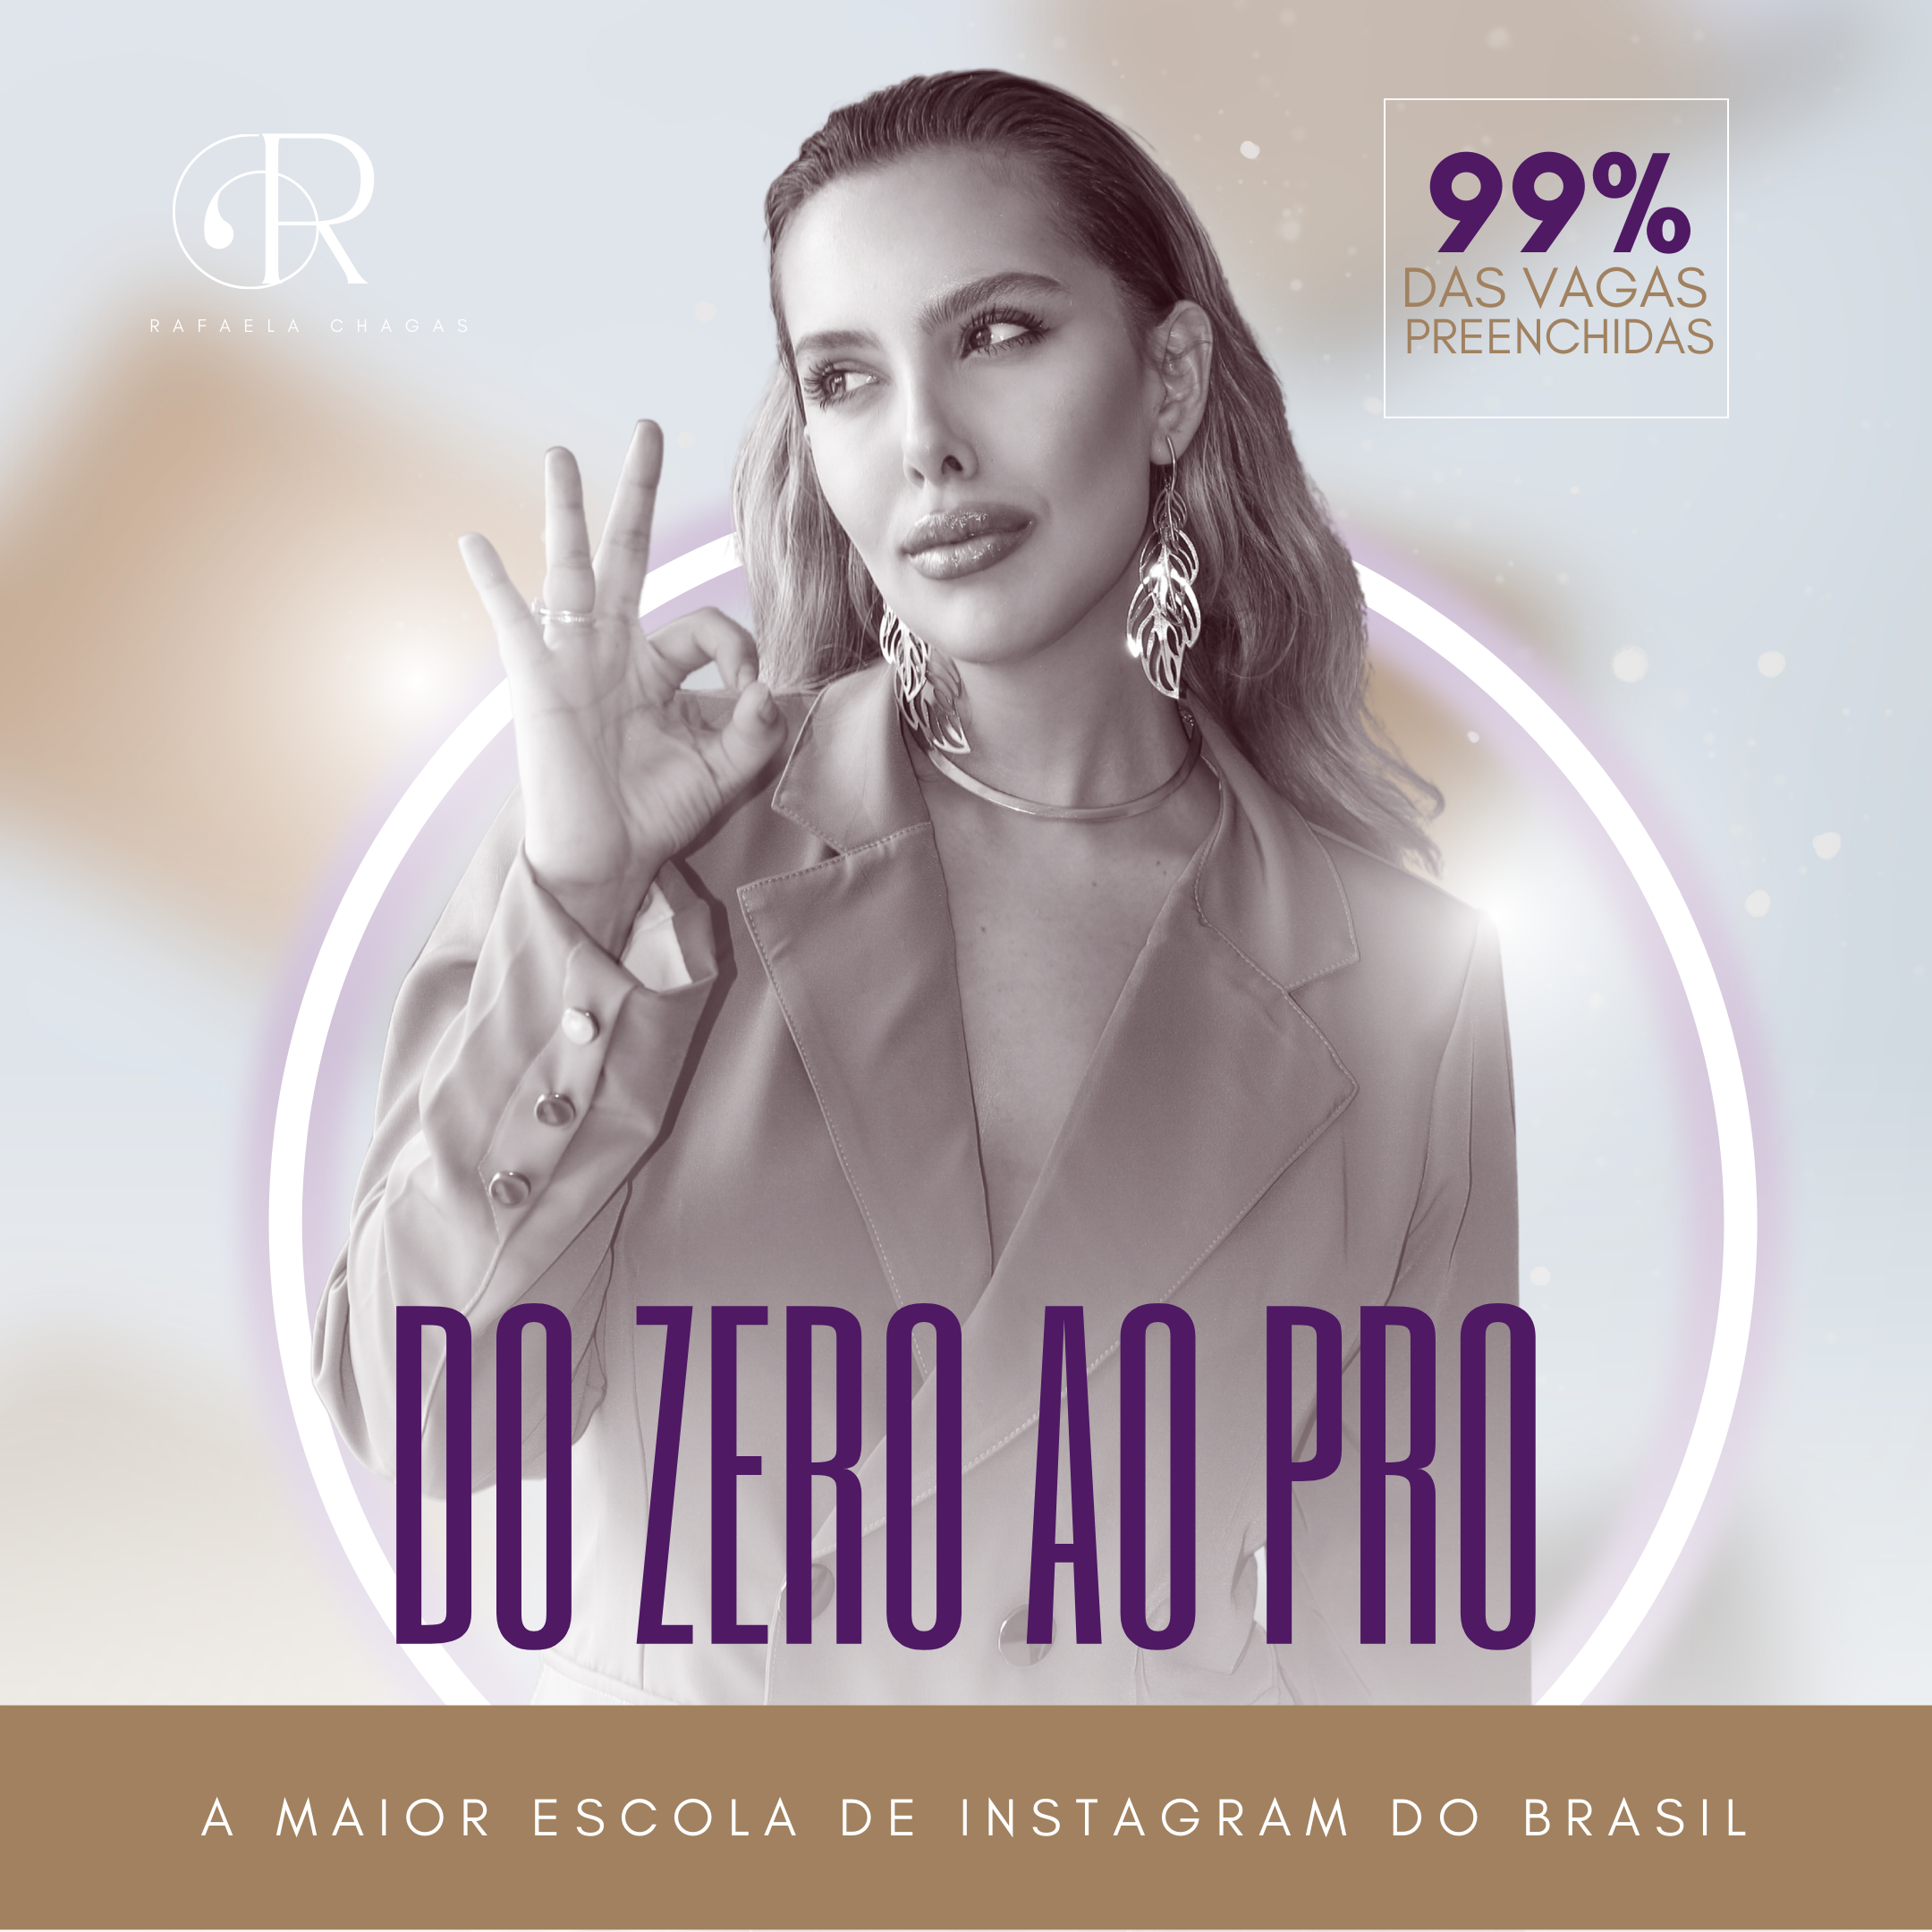 Do Zero ao Pro – Rafaela Chagas